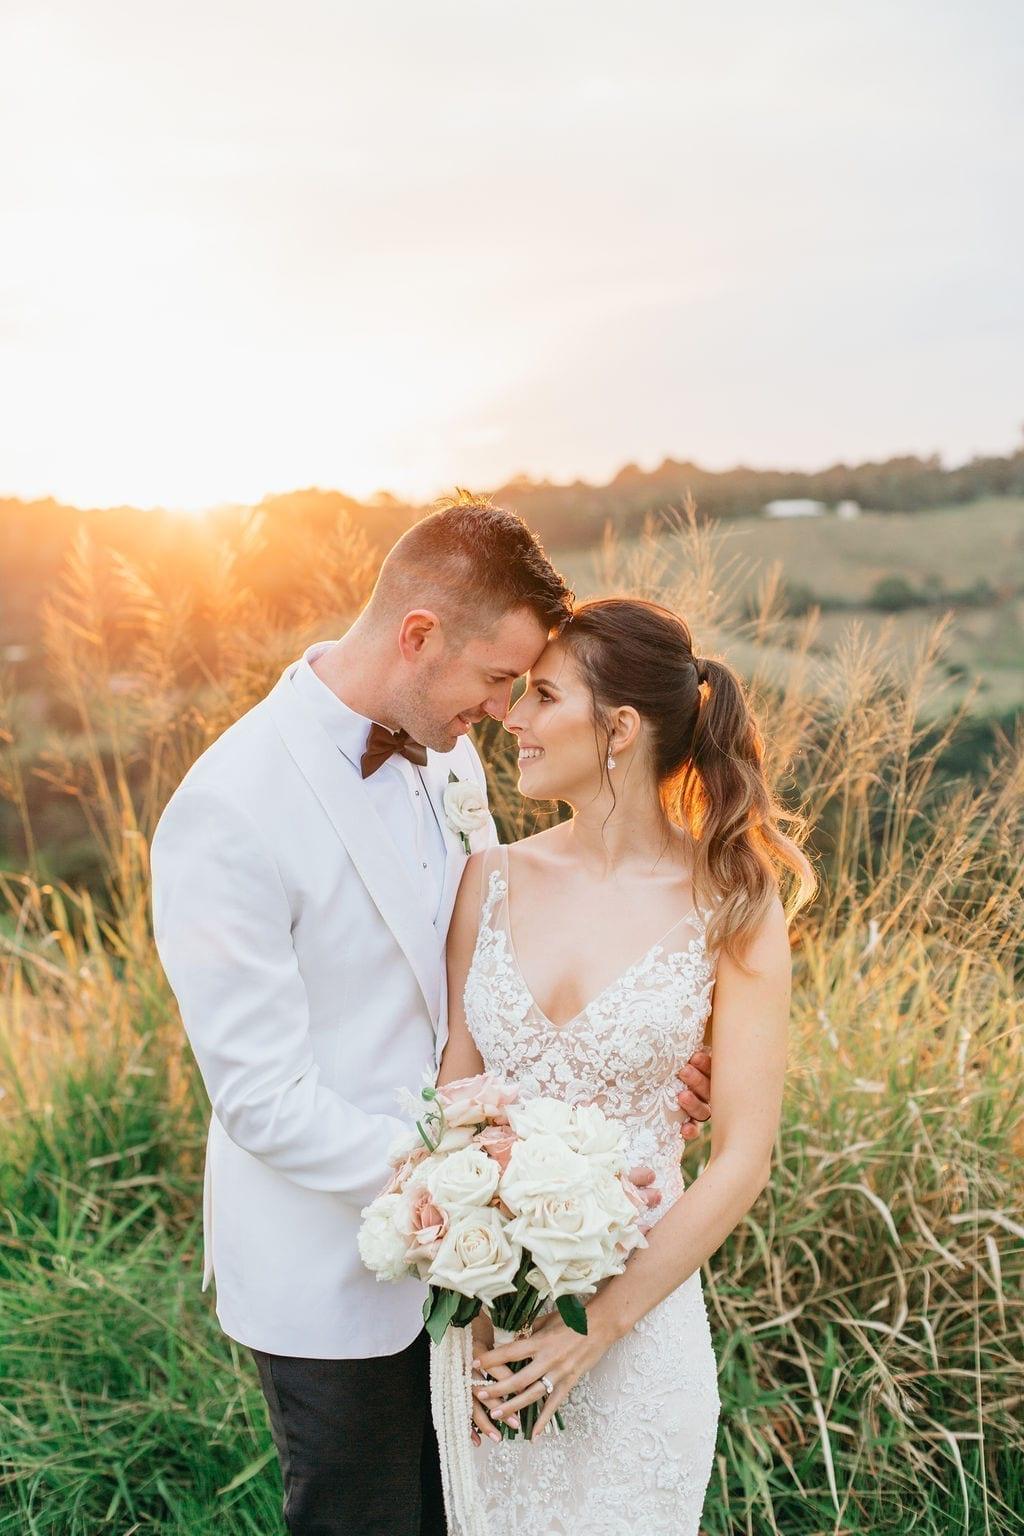 Caitlin & Daniel's Summergrove Estate Wedding - White Lily Couture